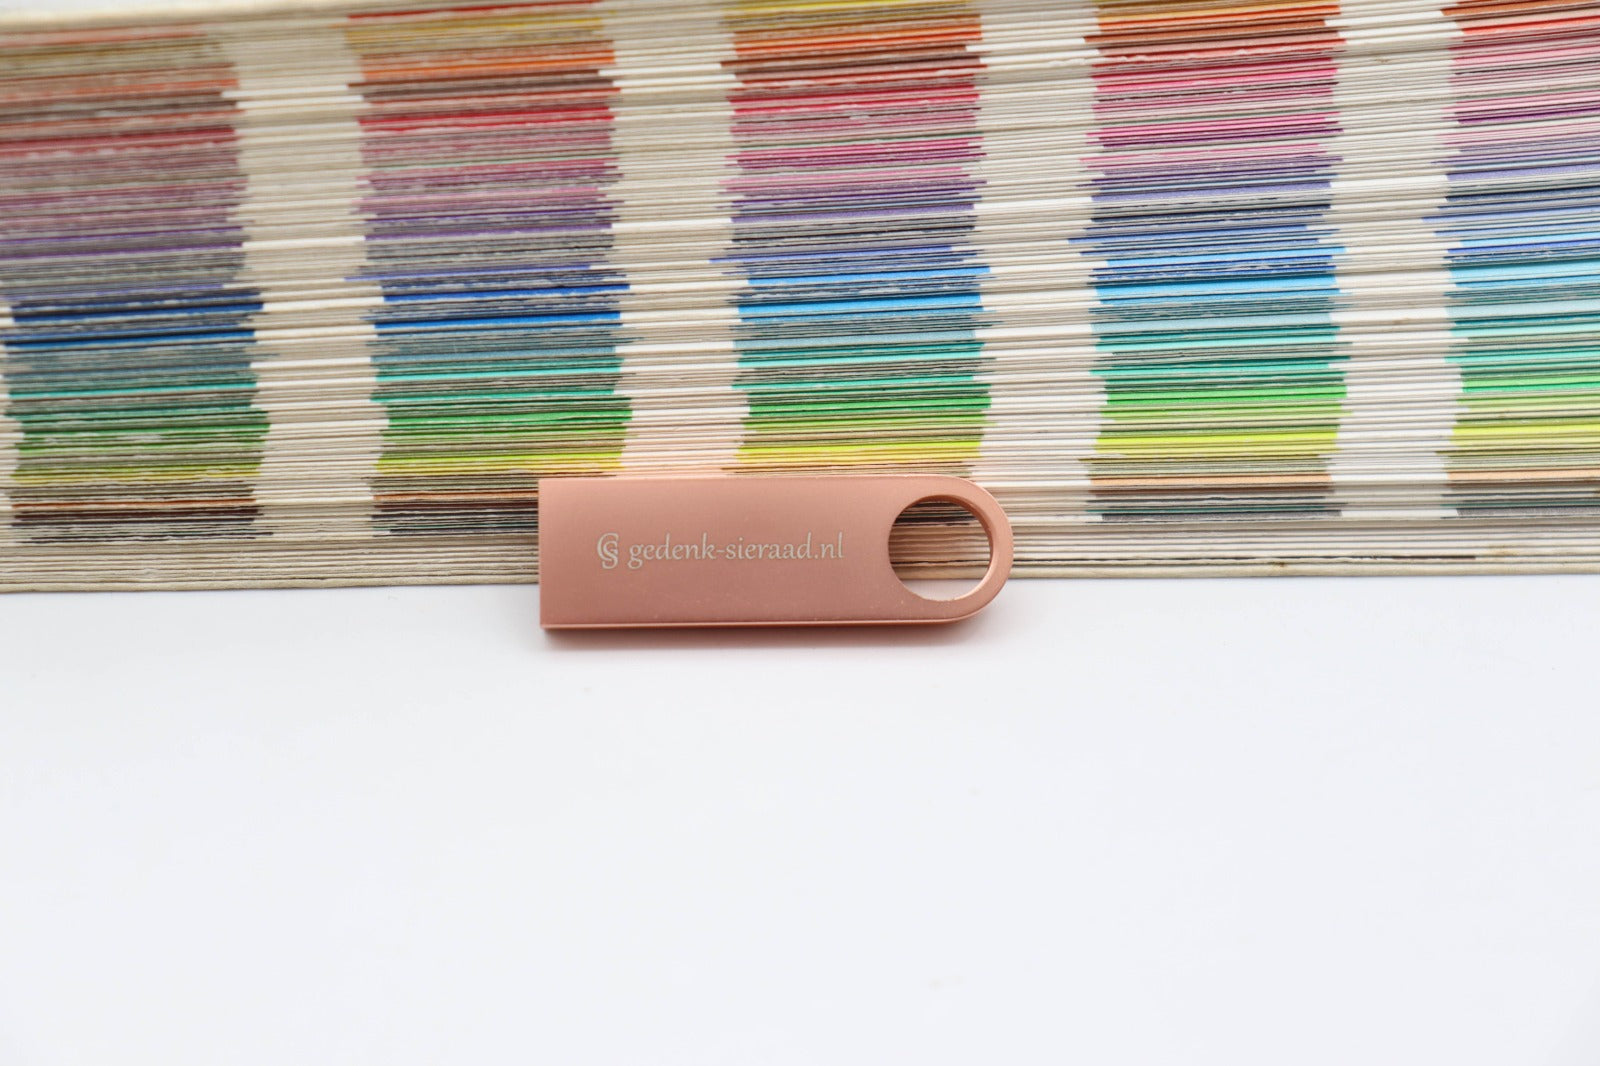 USB stick 16 GB/3.0 flash drive. Afmetingen: 38,5x12x4,5 mm. Kleur : rosé gold. Opdruk : gedenk-sieraad.nl. Inclusief sleutelhanger split ring in rosé gold kleur.